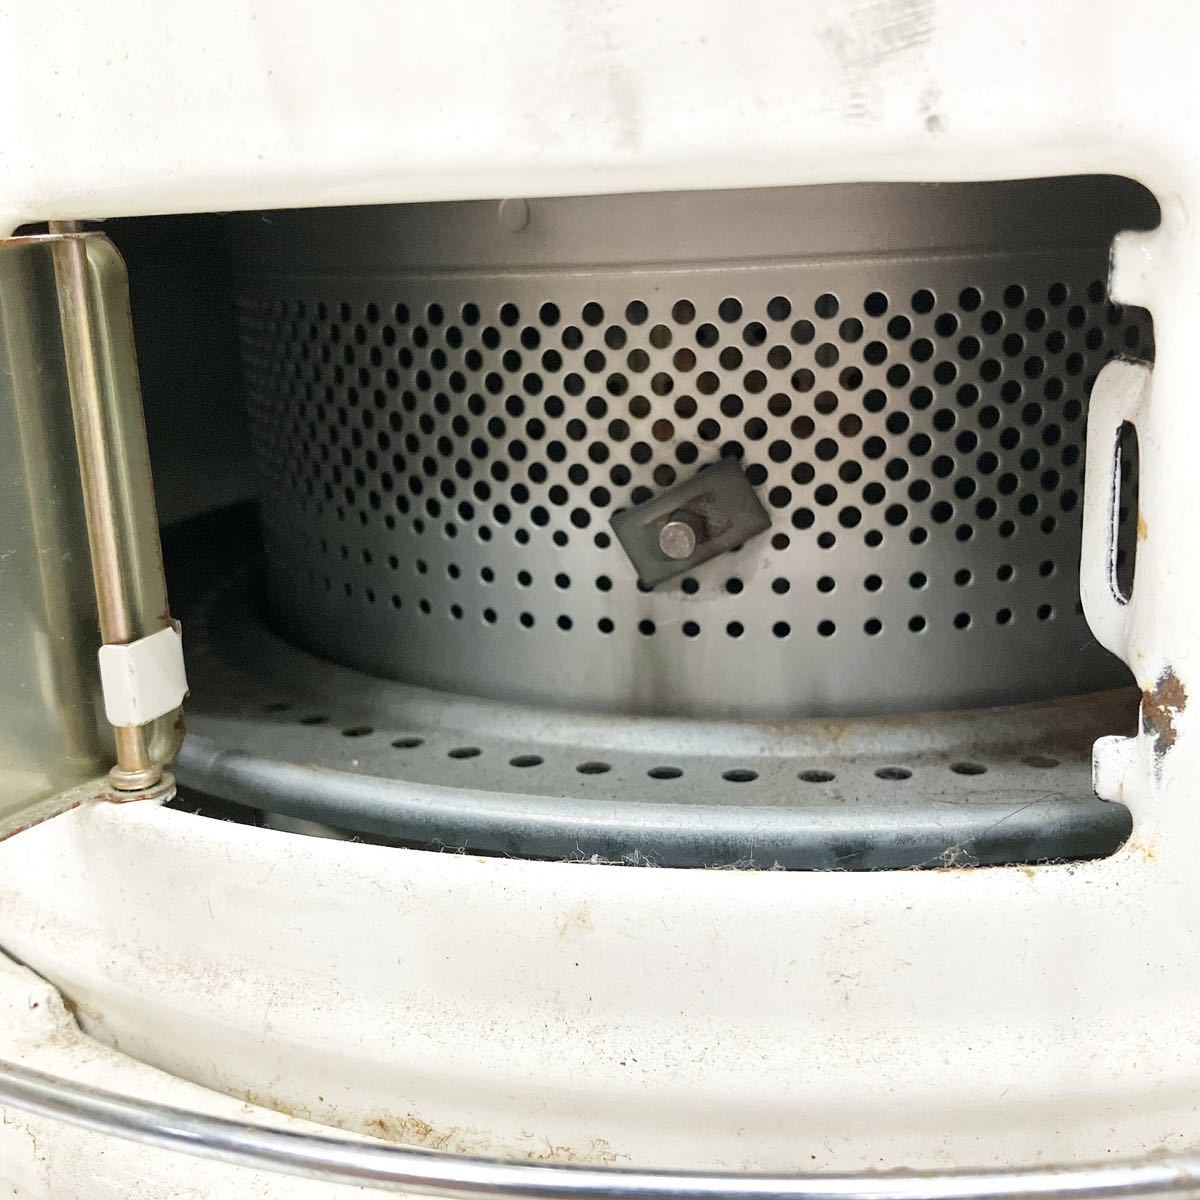 CORONA コロナ 自然通気形開放式石油ストーブ SL-221 暖房機器 alp大_画像7